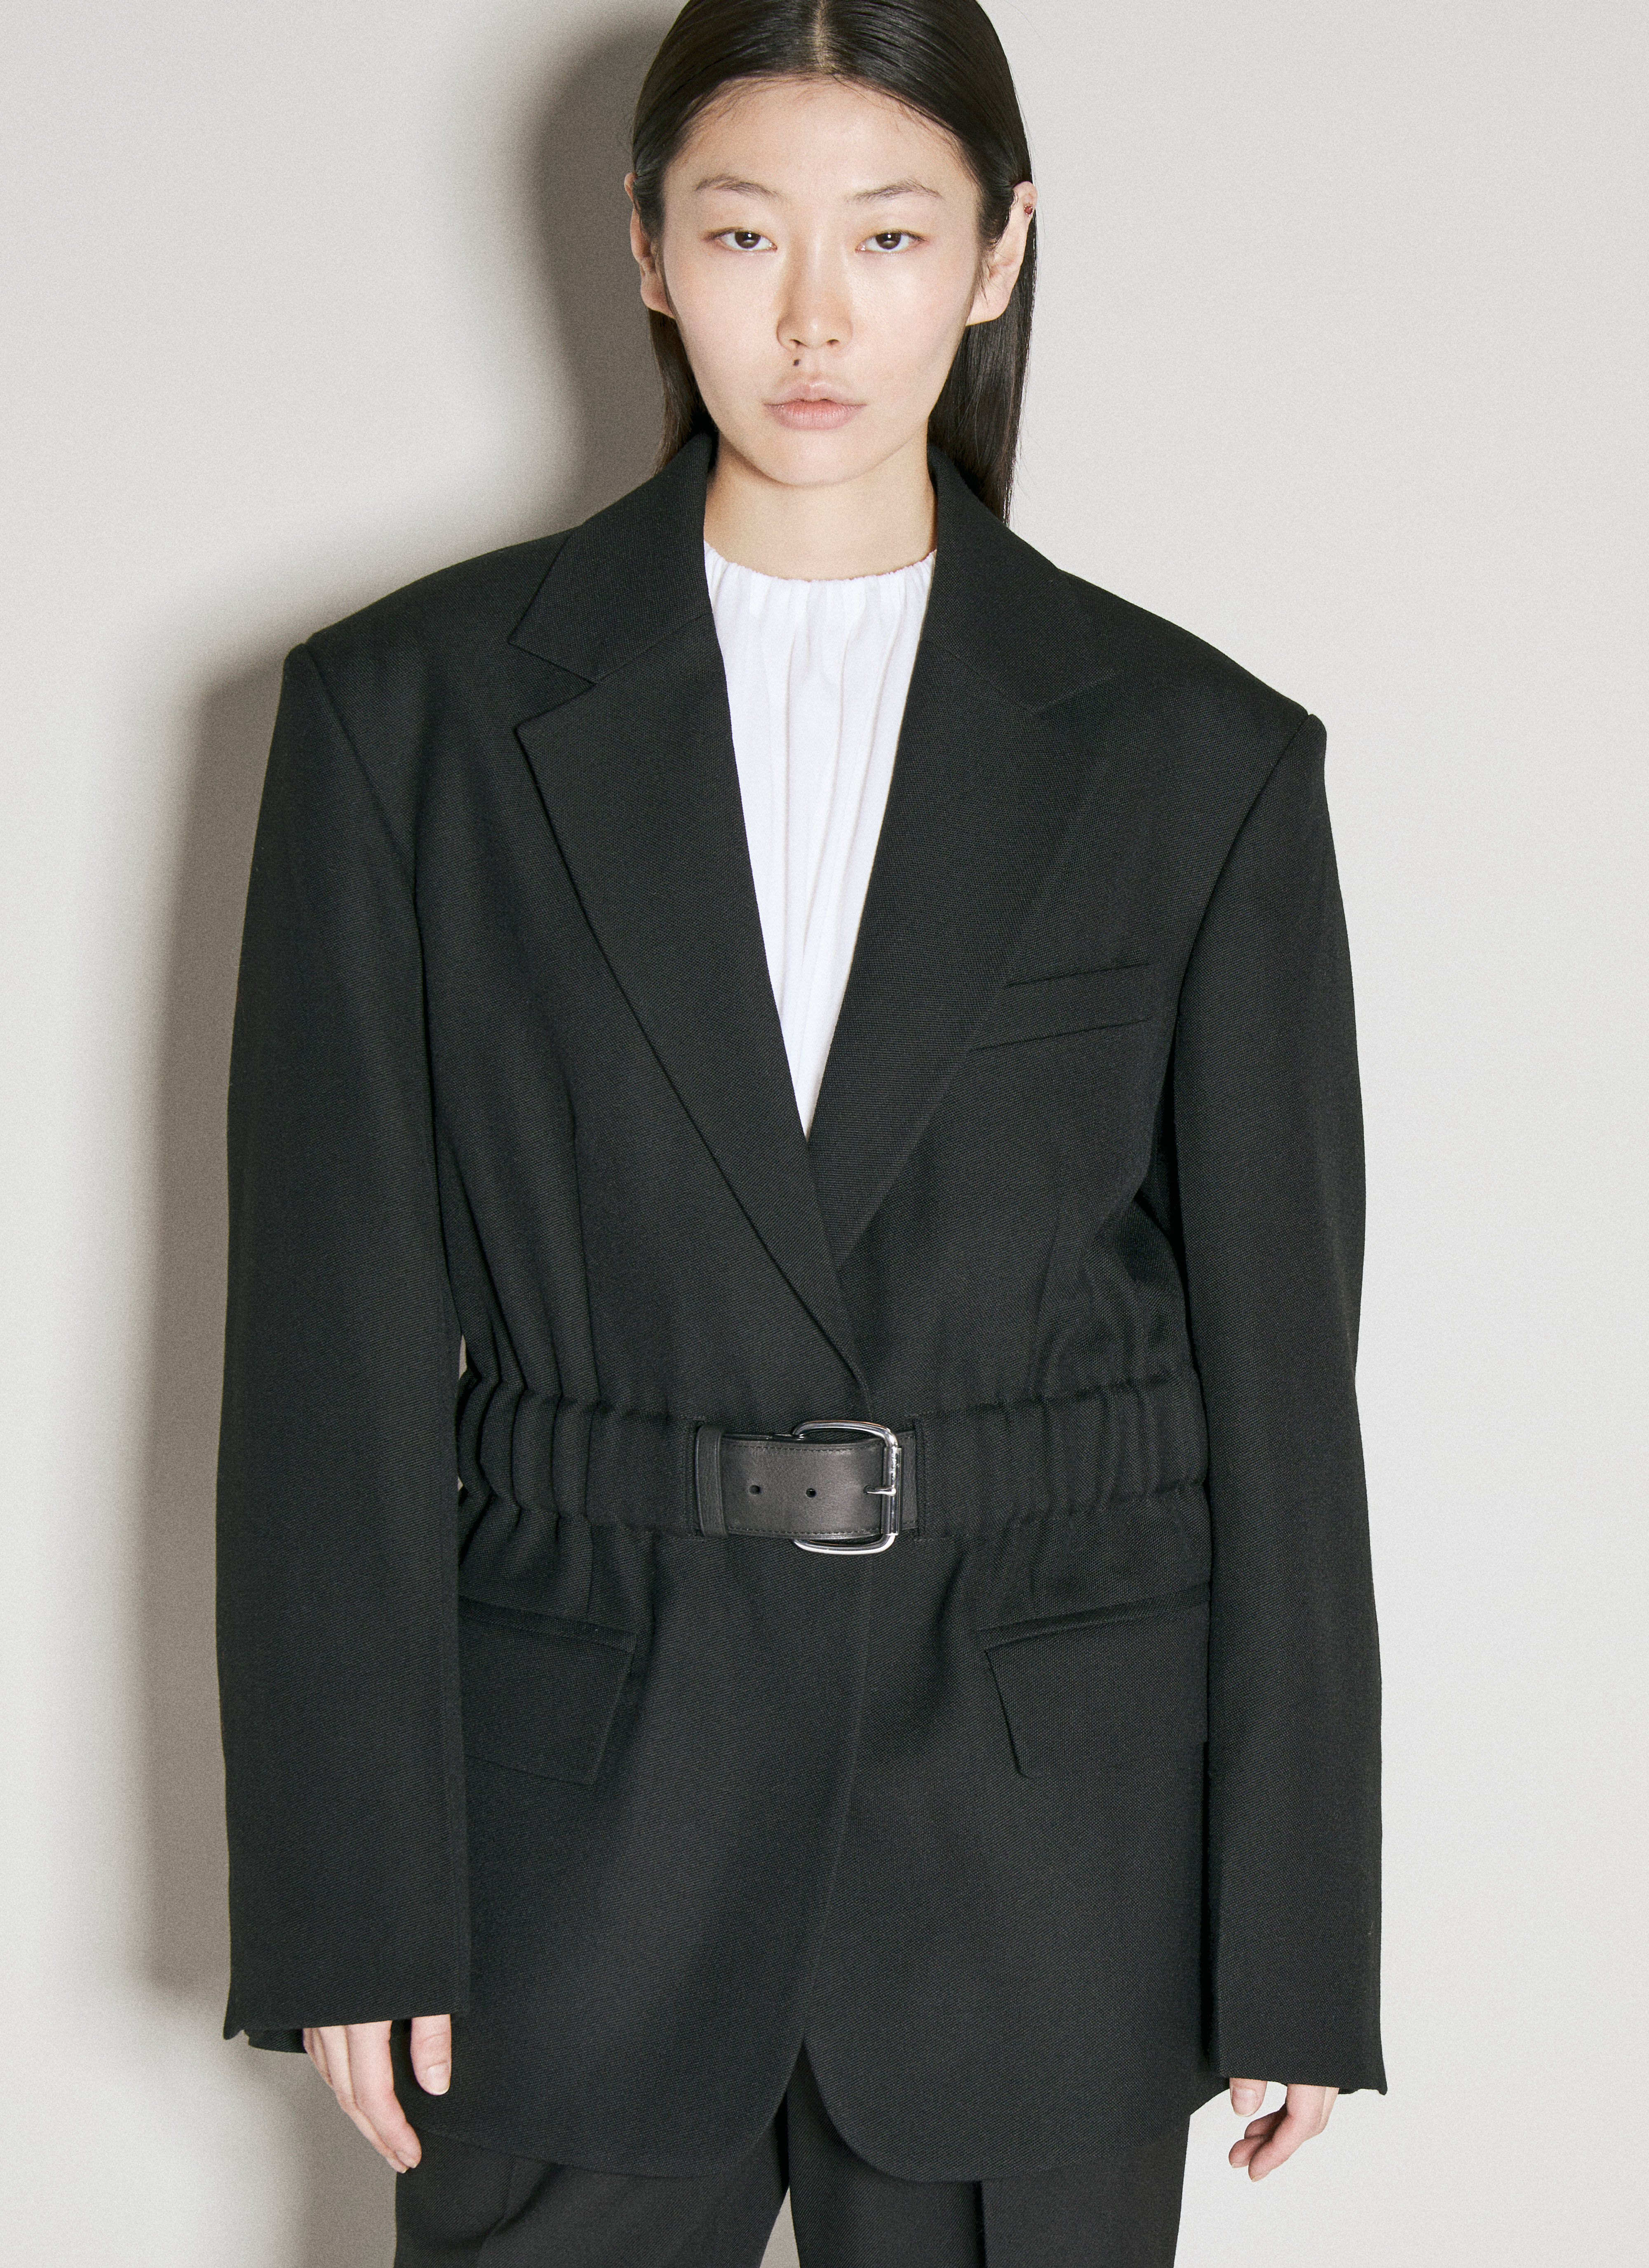 Alexander Wang Tailored Blazer With Intergrate Belt Black awg0253017